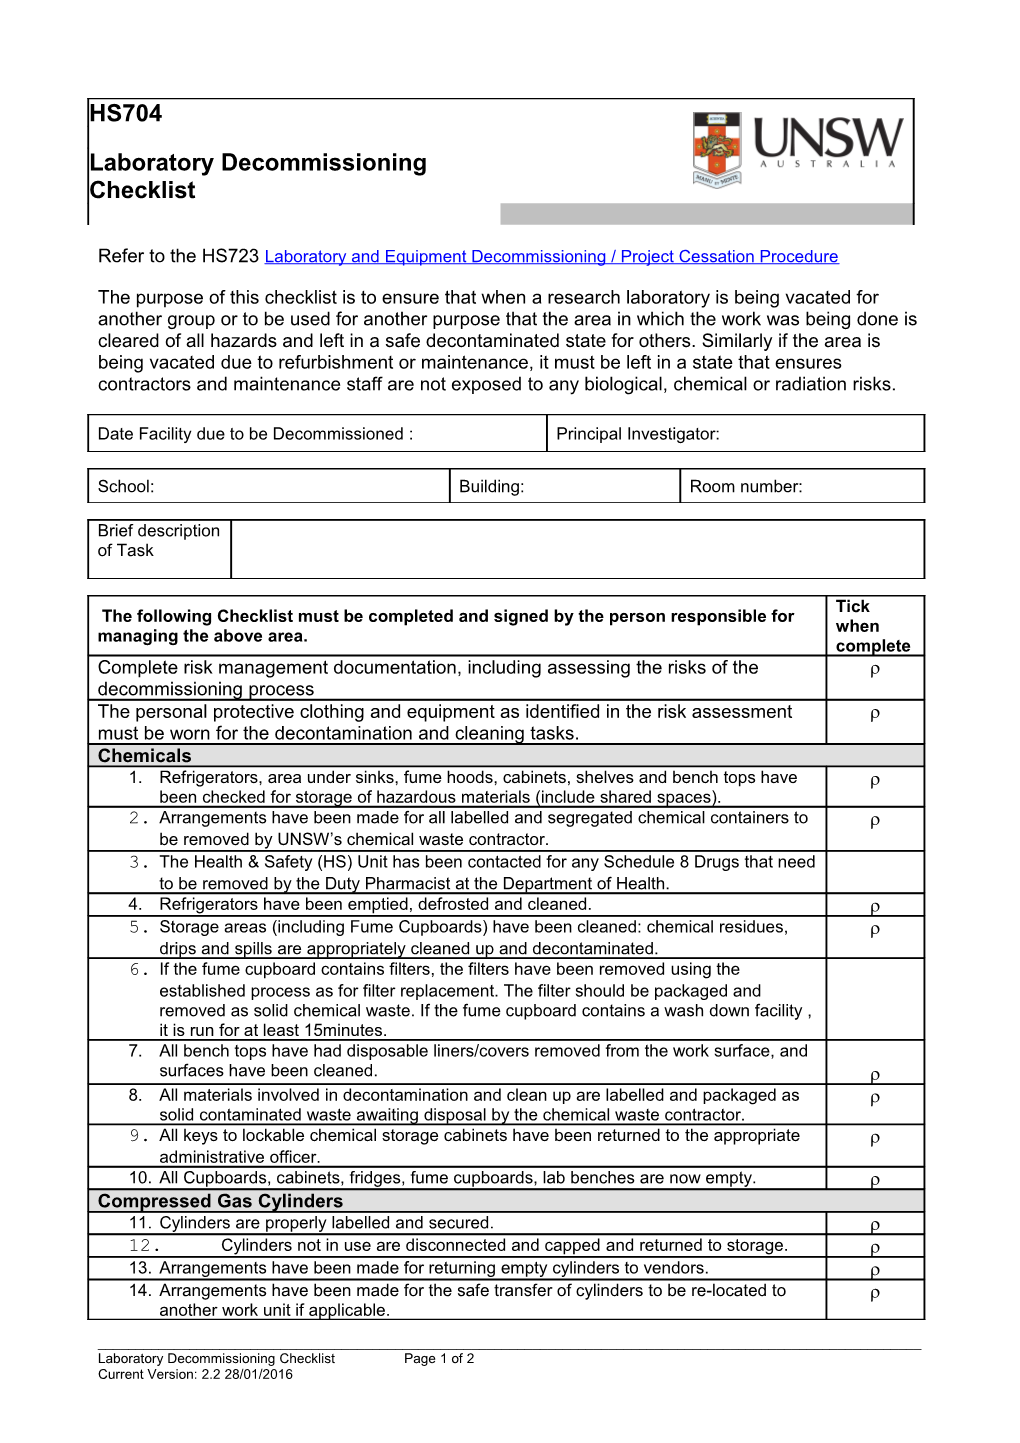 Laboratory Decommissioning Checklist